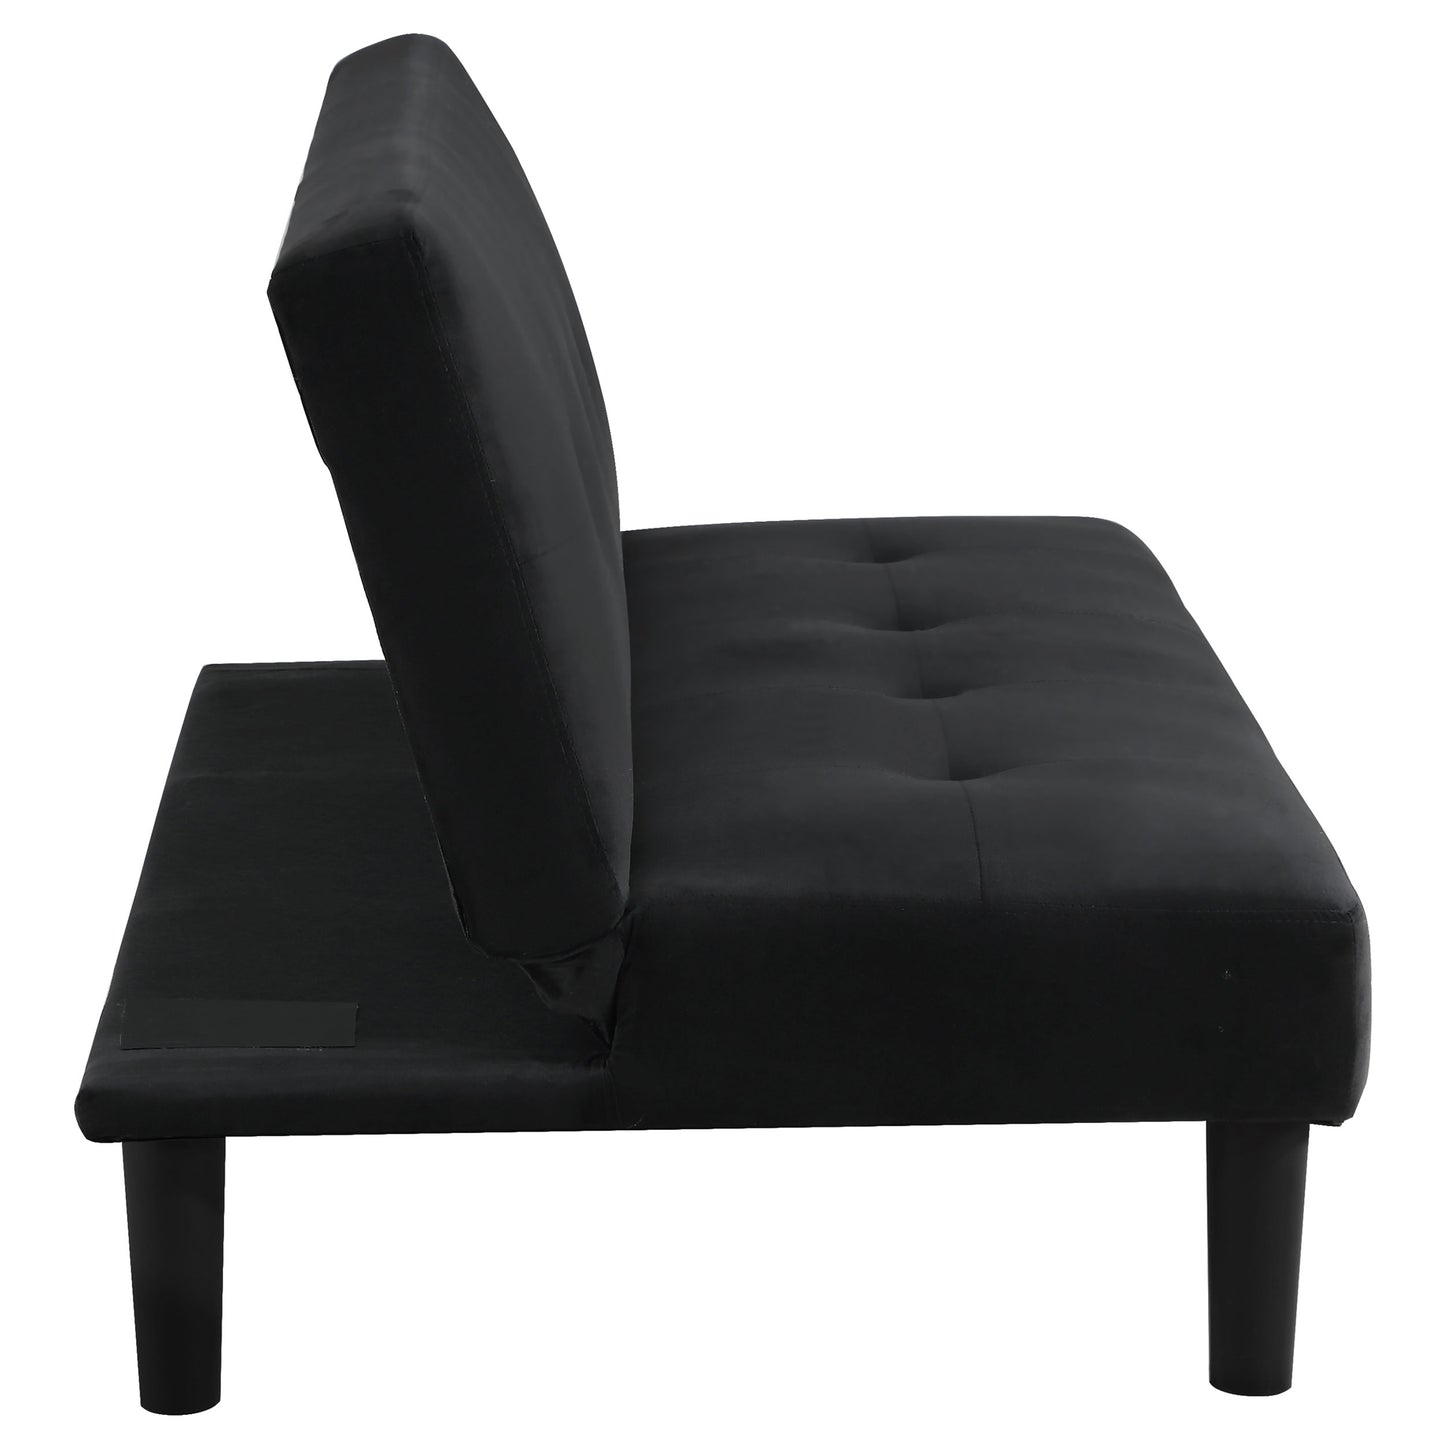 Stanford Multipurpose Upholstered Tufted Convertible Sofa Bed Black